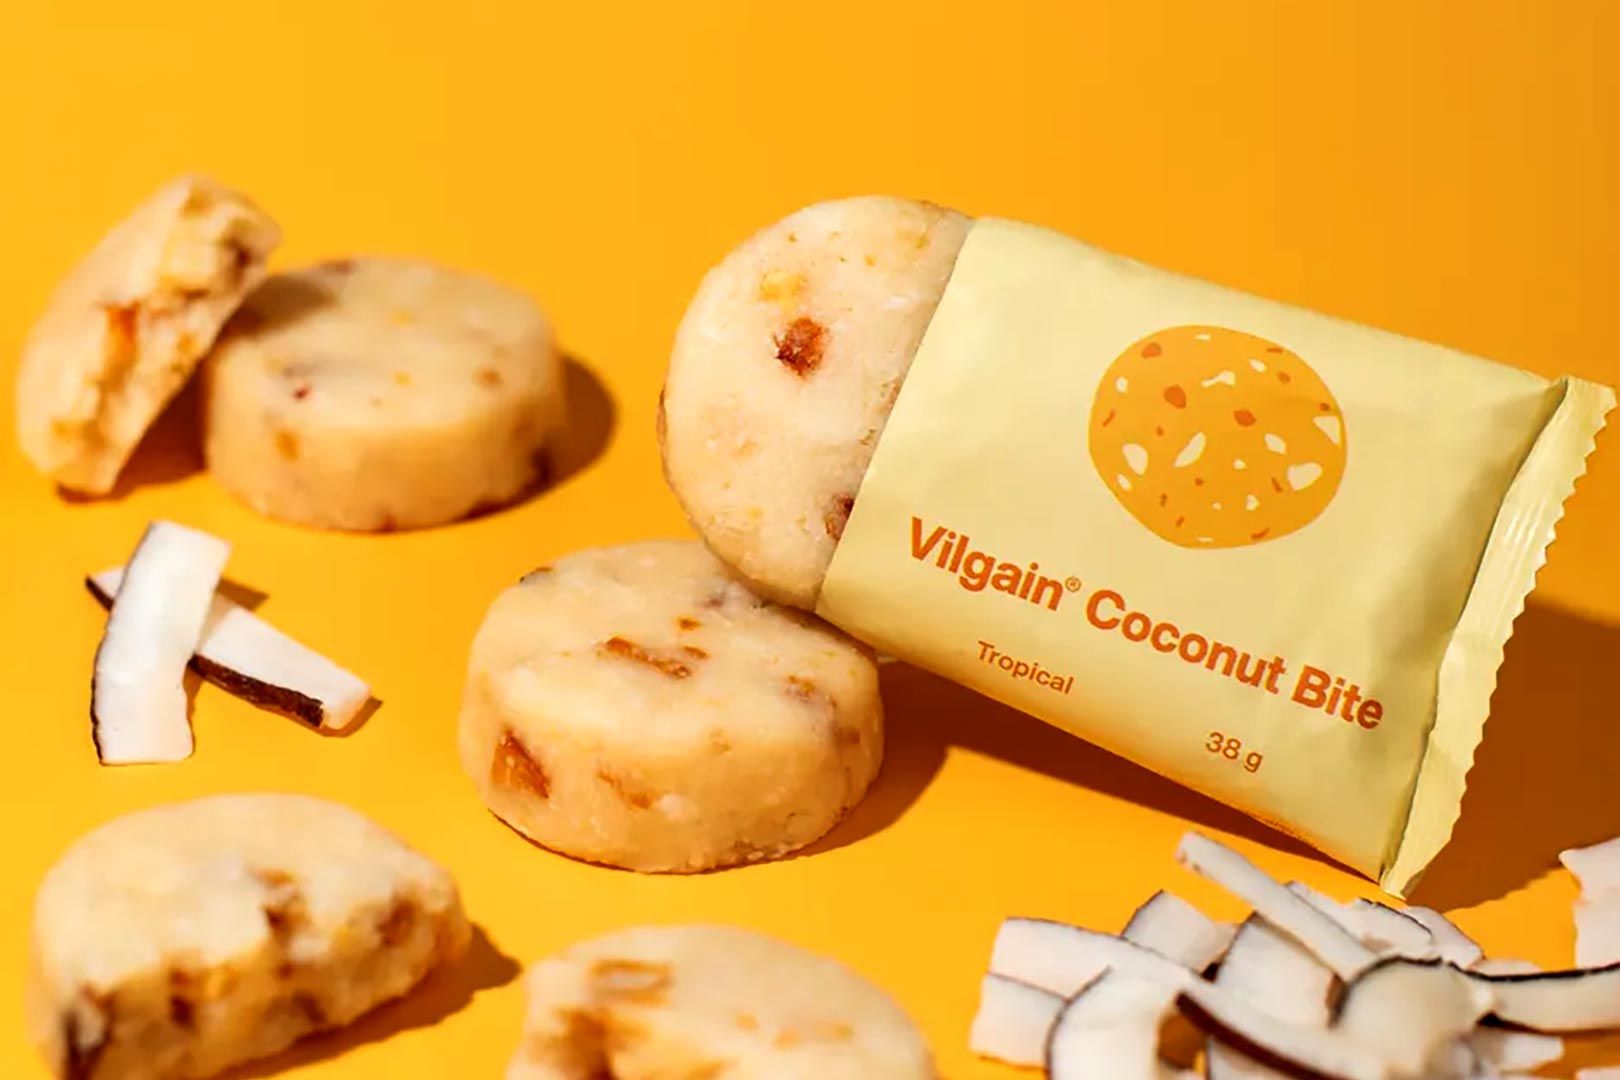 Vilgain Three More Flavors Of Coconut Bites